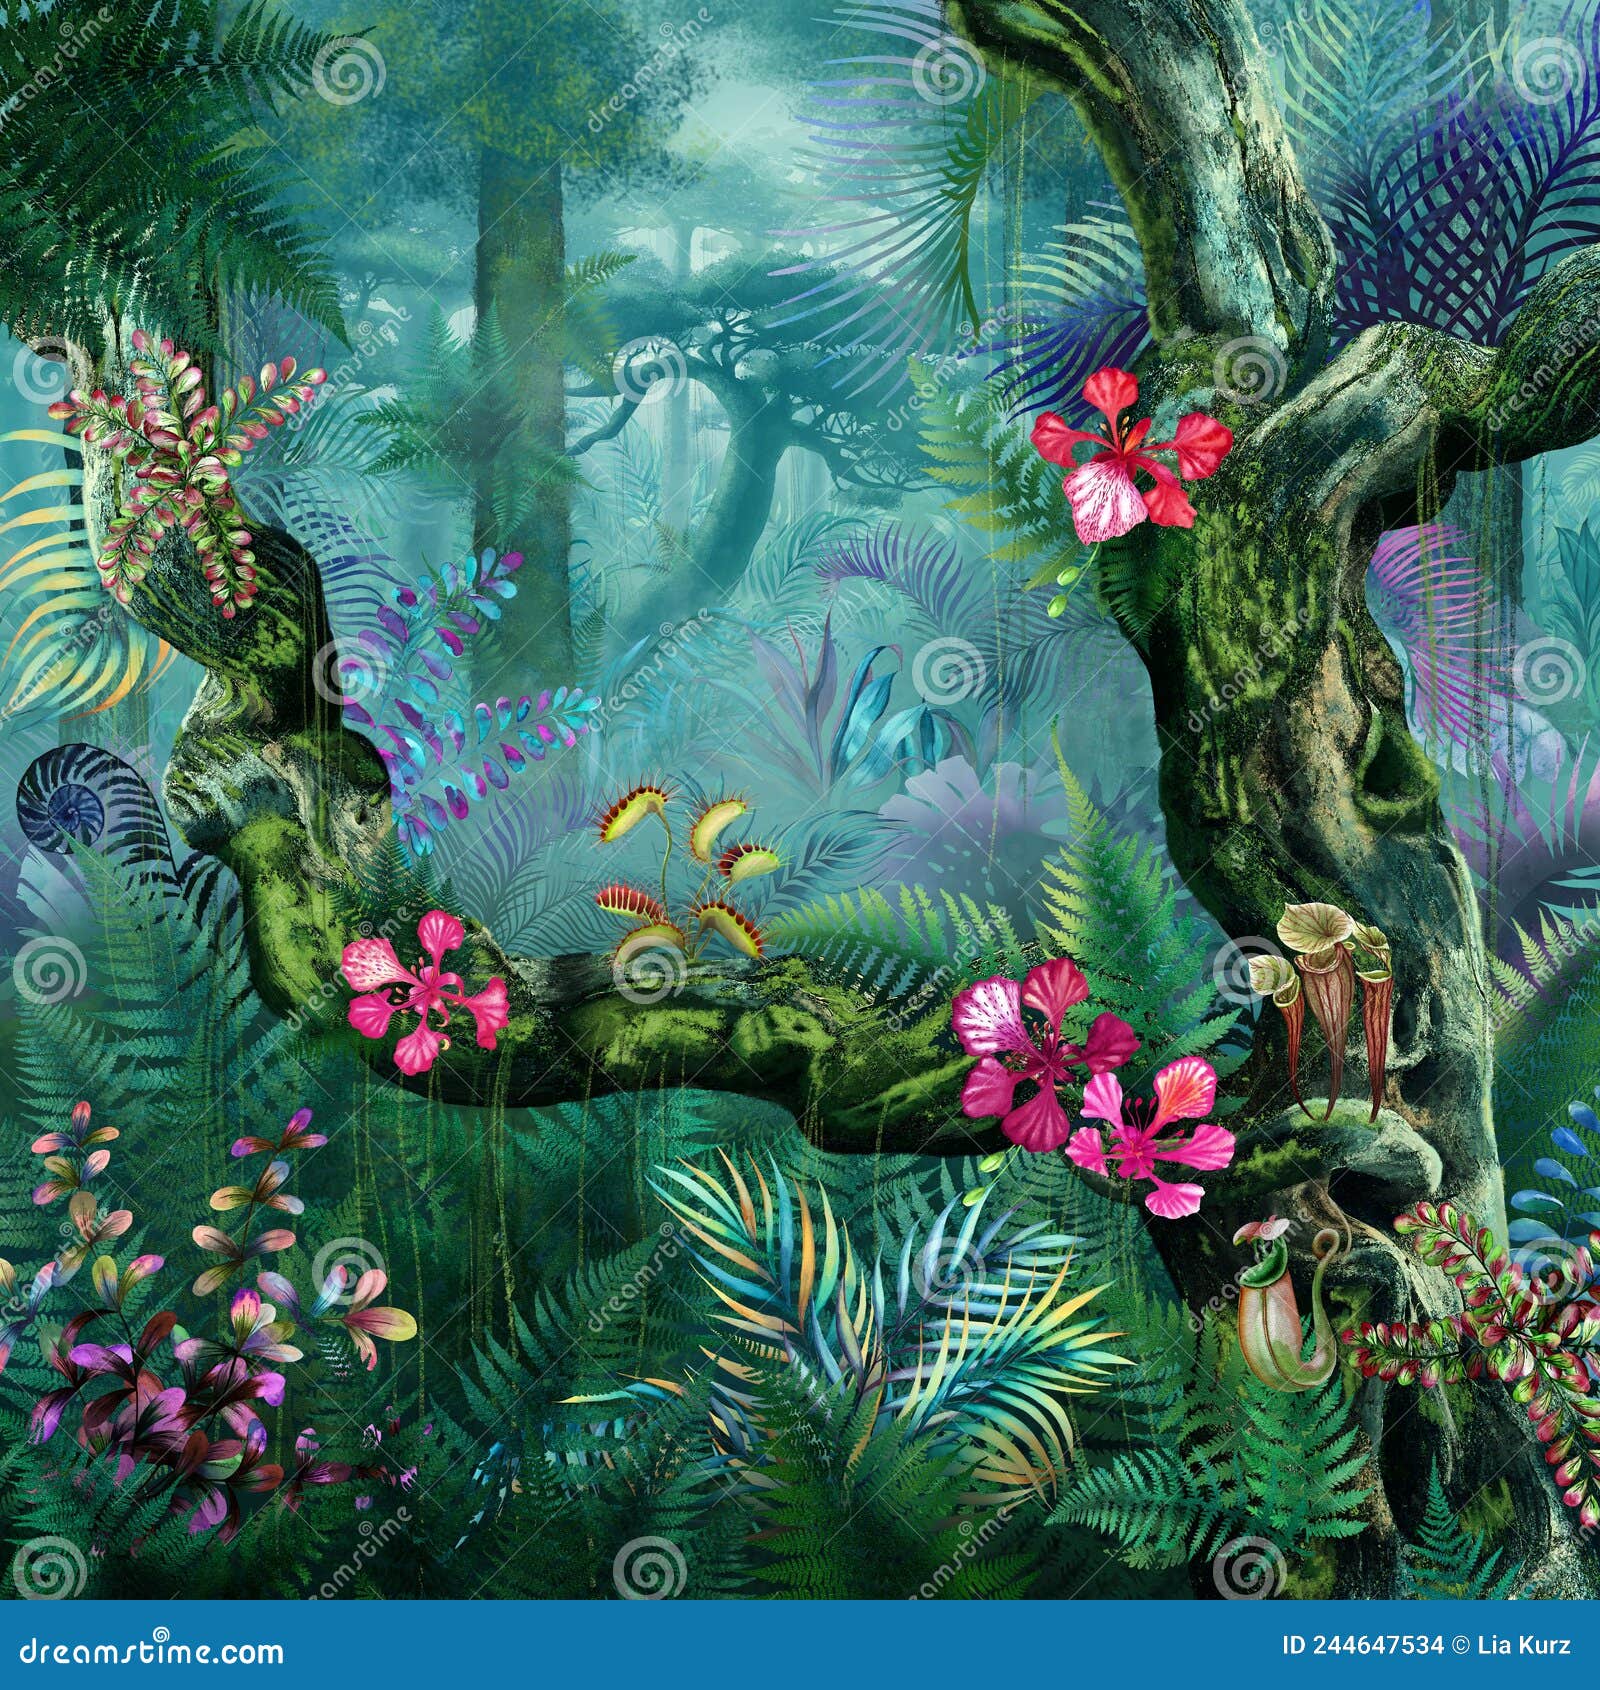 Tropical Fantasy Forest Illustration Elven Forest Background Exotic Summer  Scenery Stock Illustration - Illustration of fern, plants: 244647534